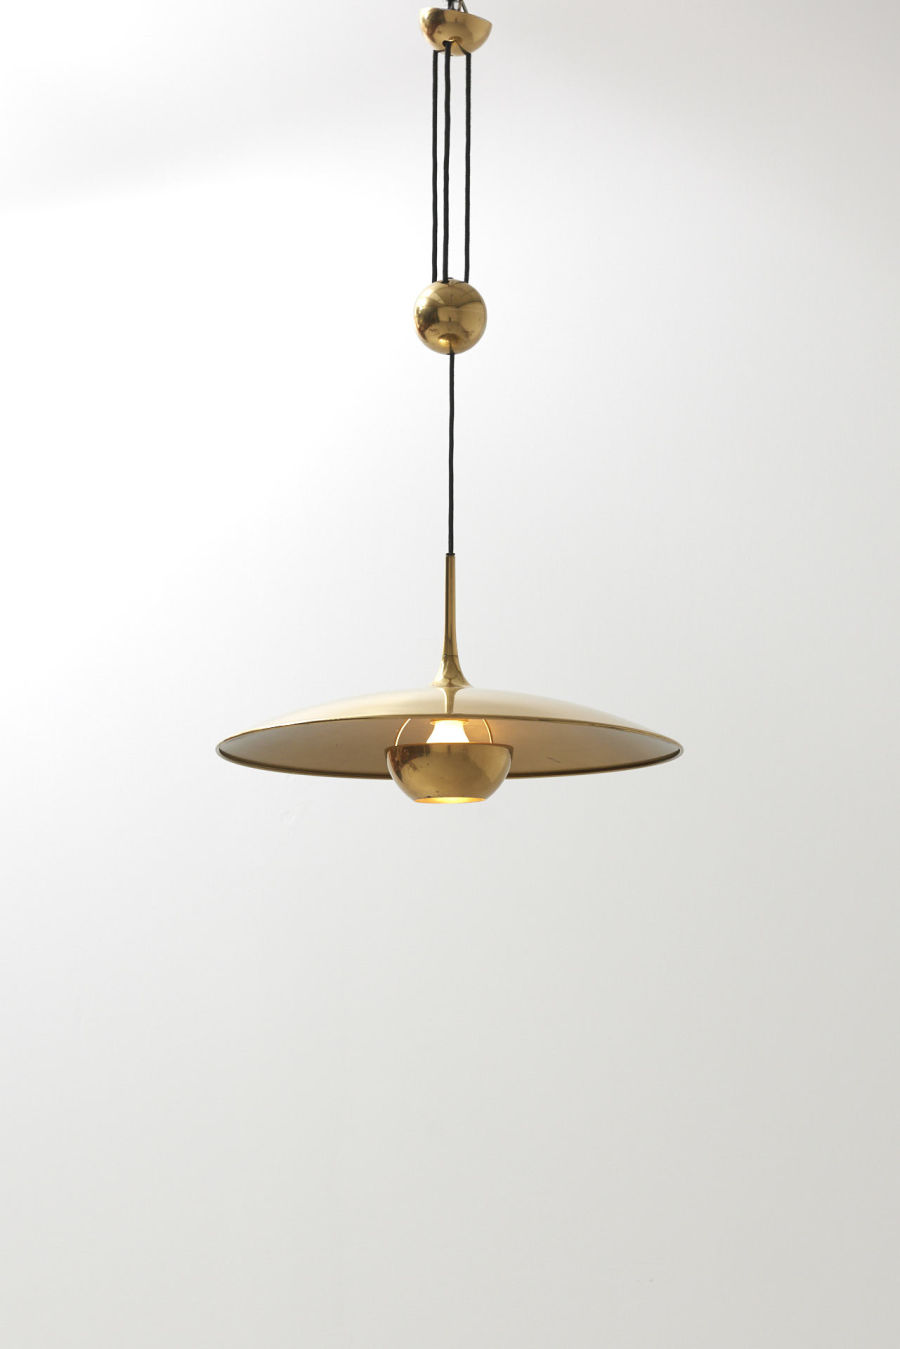 modestfurniture-vintage-2167-adjustable-ceiling-lamp-brass-florian-schulz06